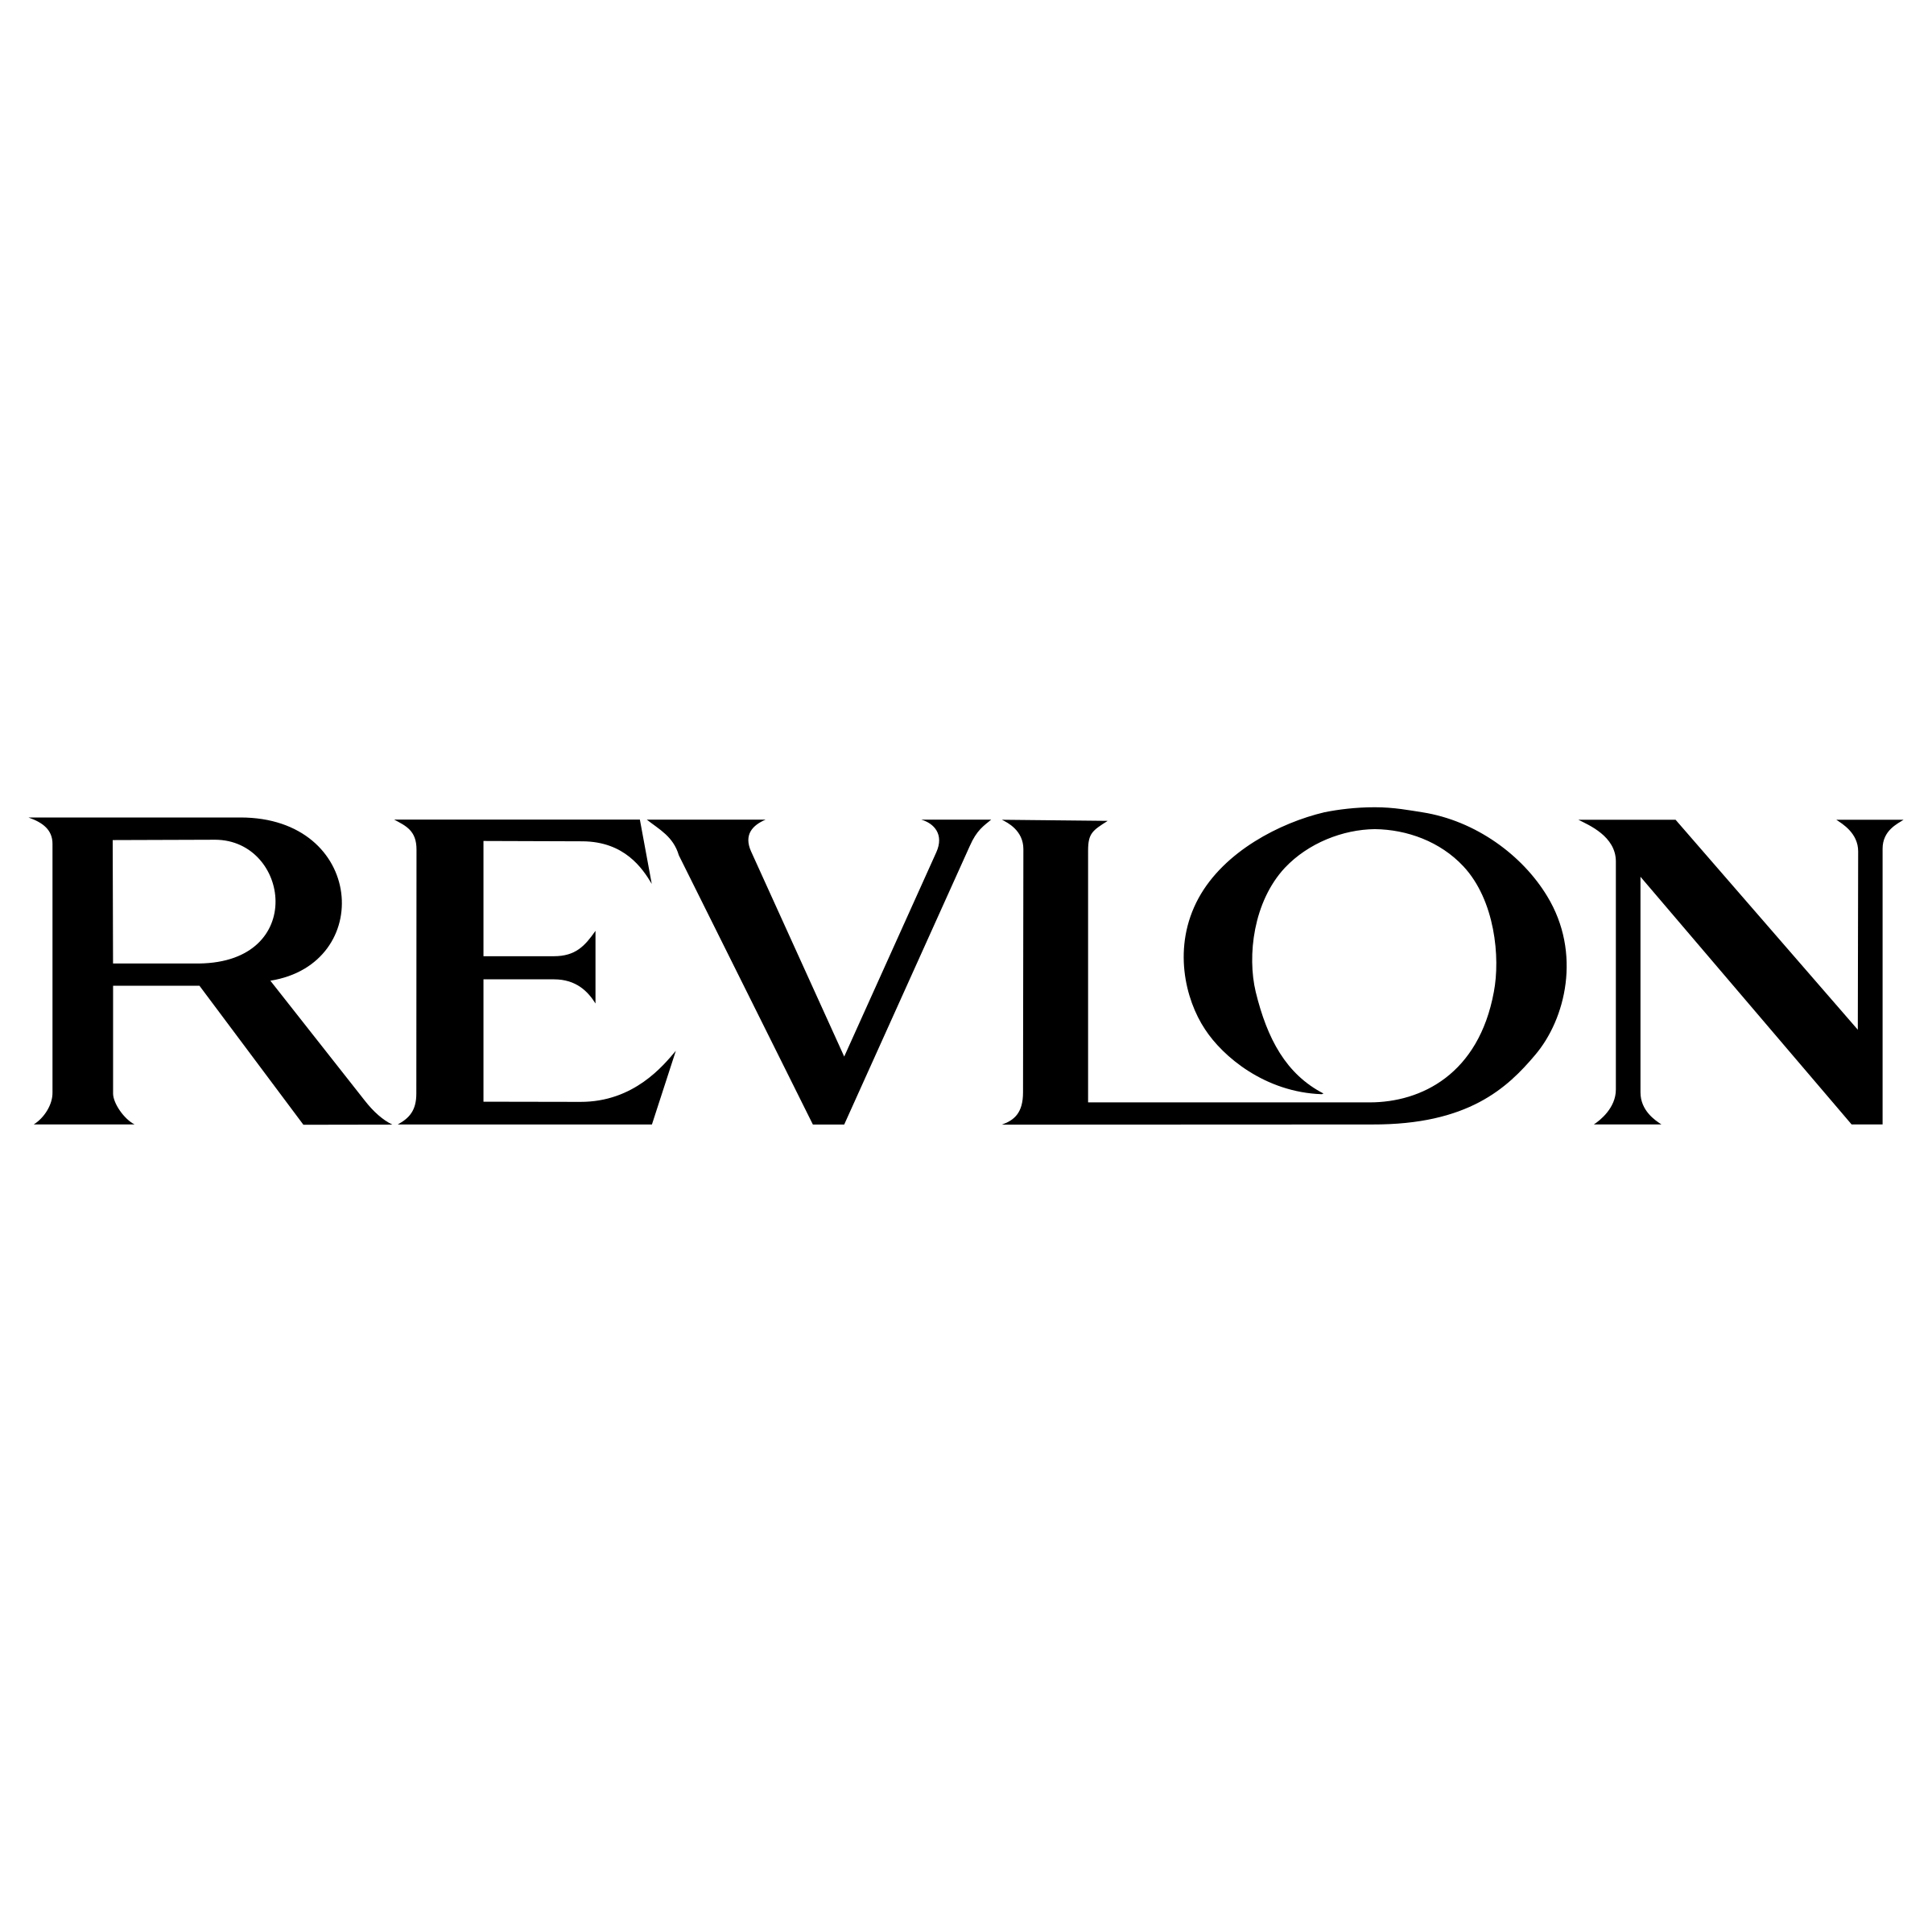 Revlon Professional Logo Png 